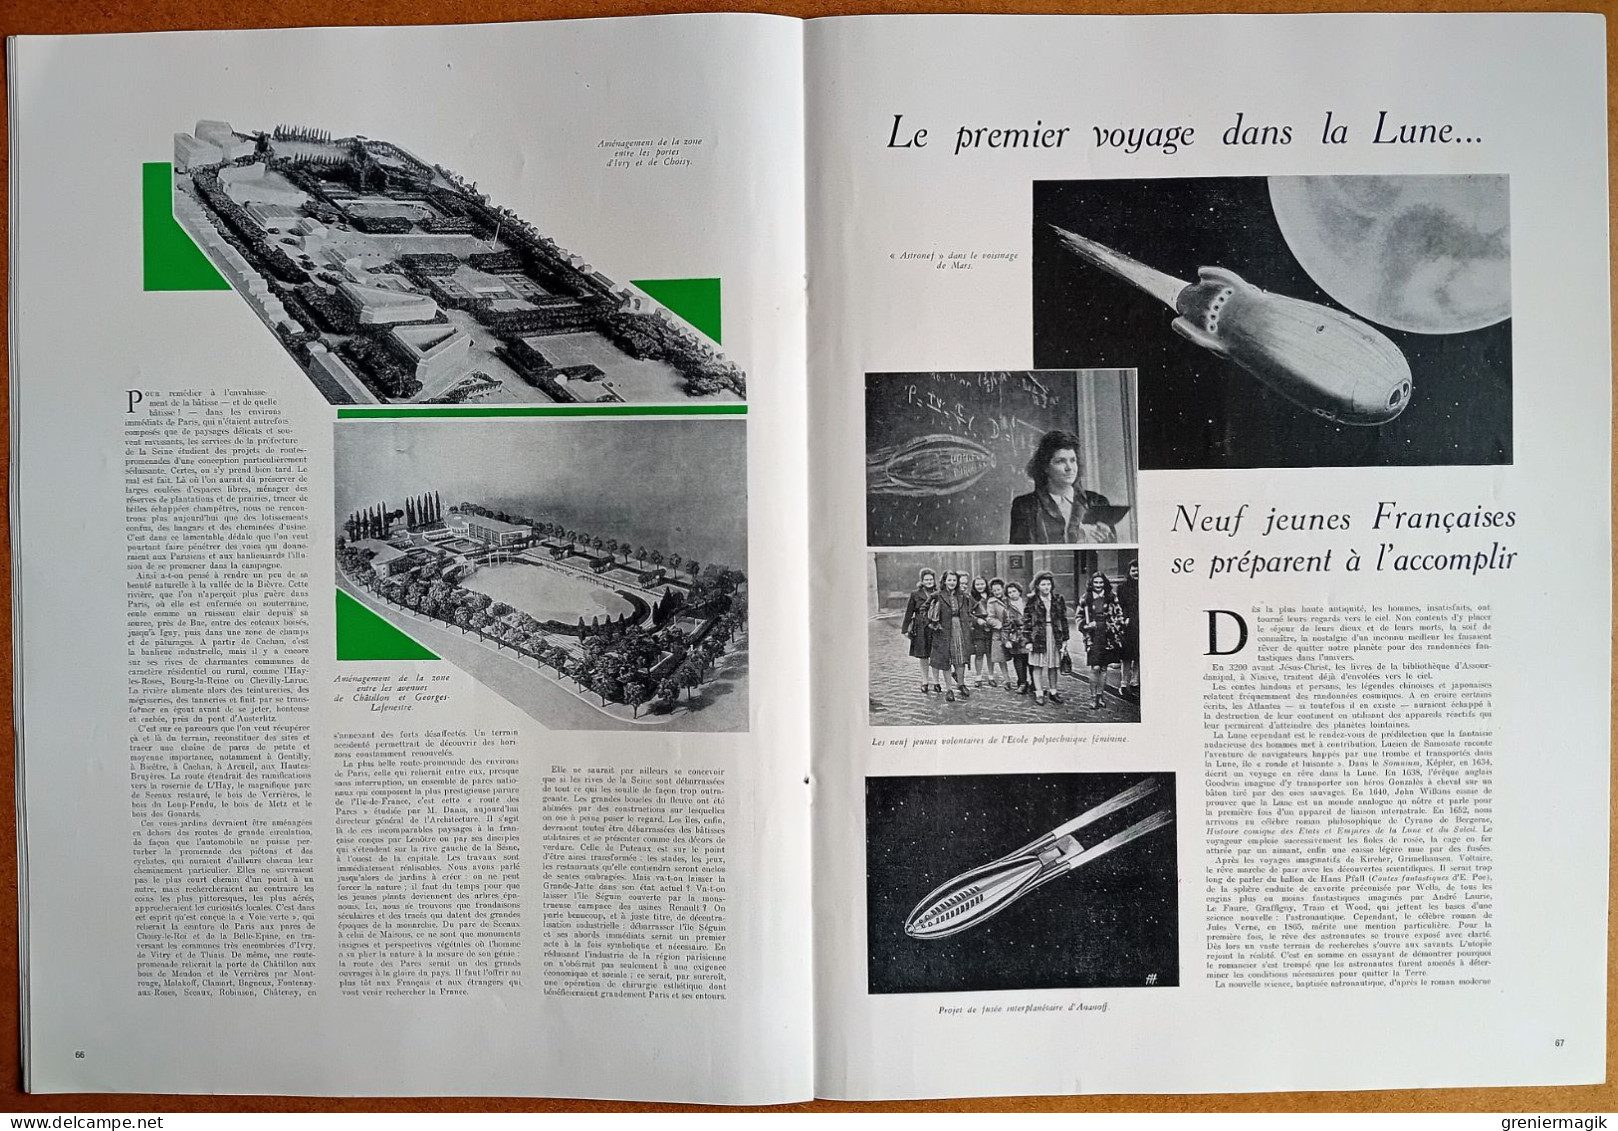 France Illustration N°16 19/01/1946 O.N.U./Tchécoslovaquie/Katherine Mansfield/Voyage lune Ananoff/Danses au Japon